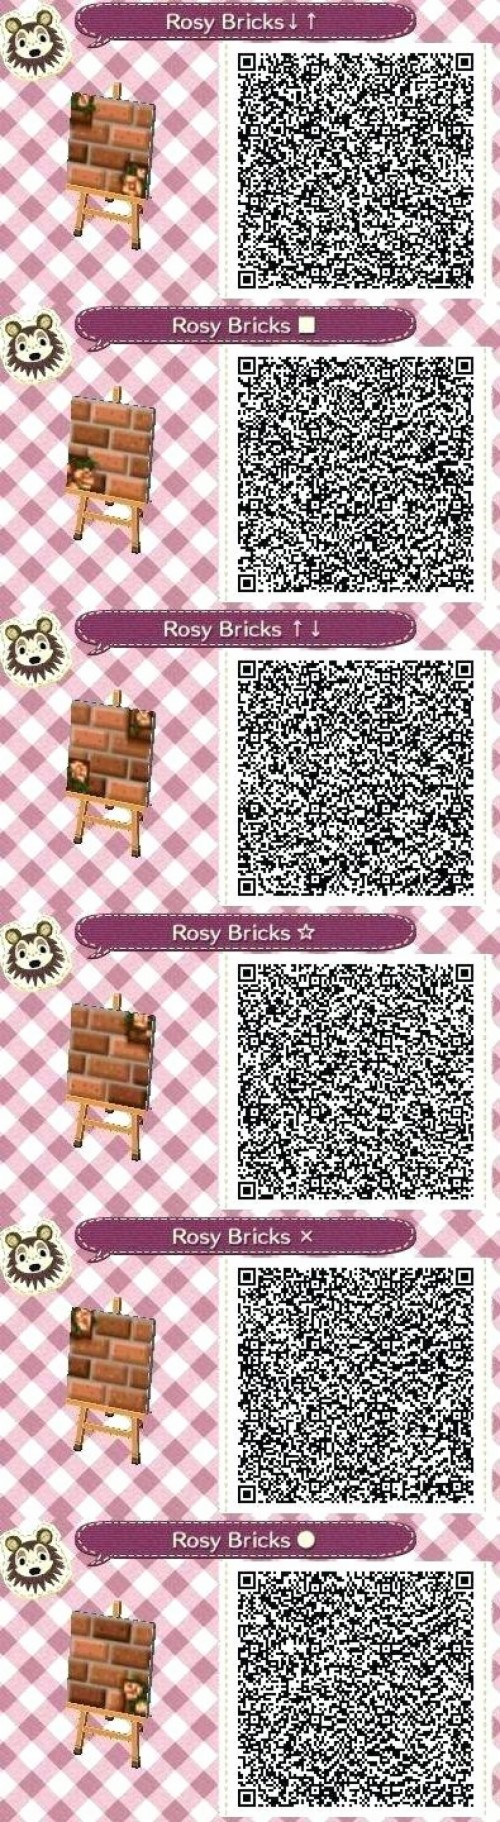 15440 Animal Crossing Wallpaper Qr Codes Acnl Gray Brick Path